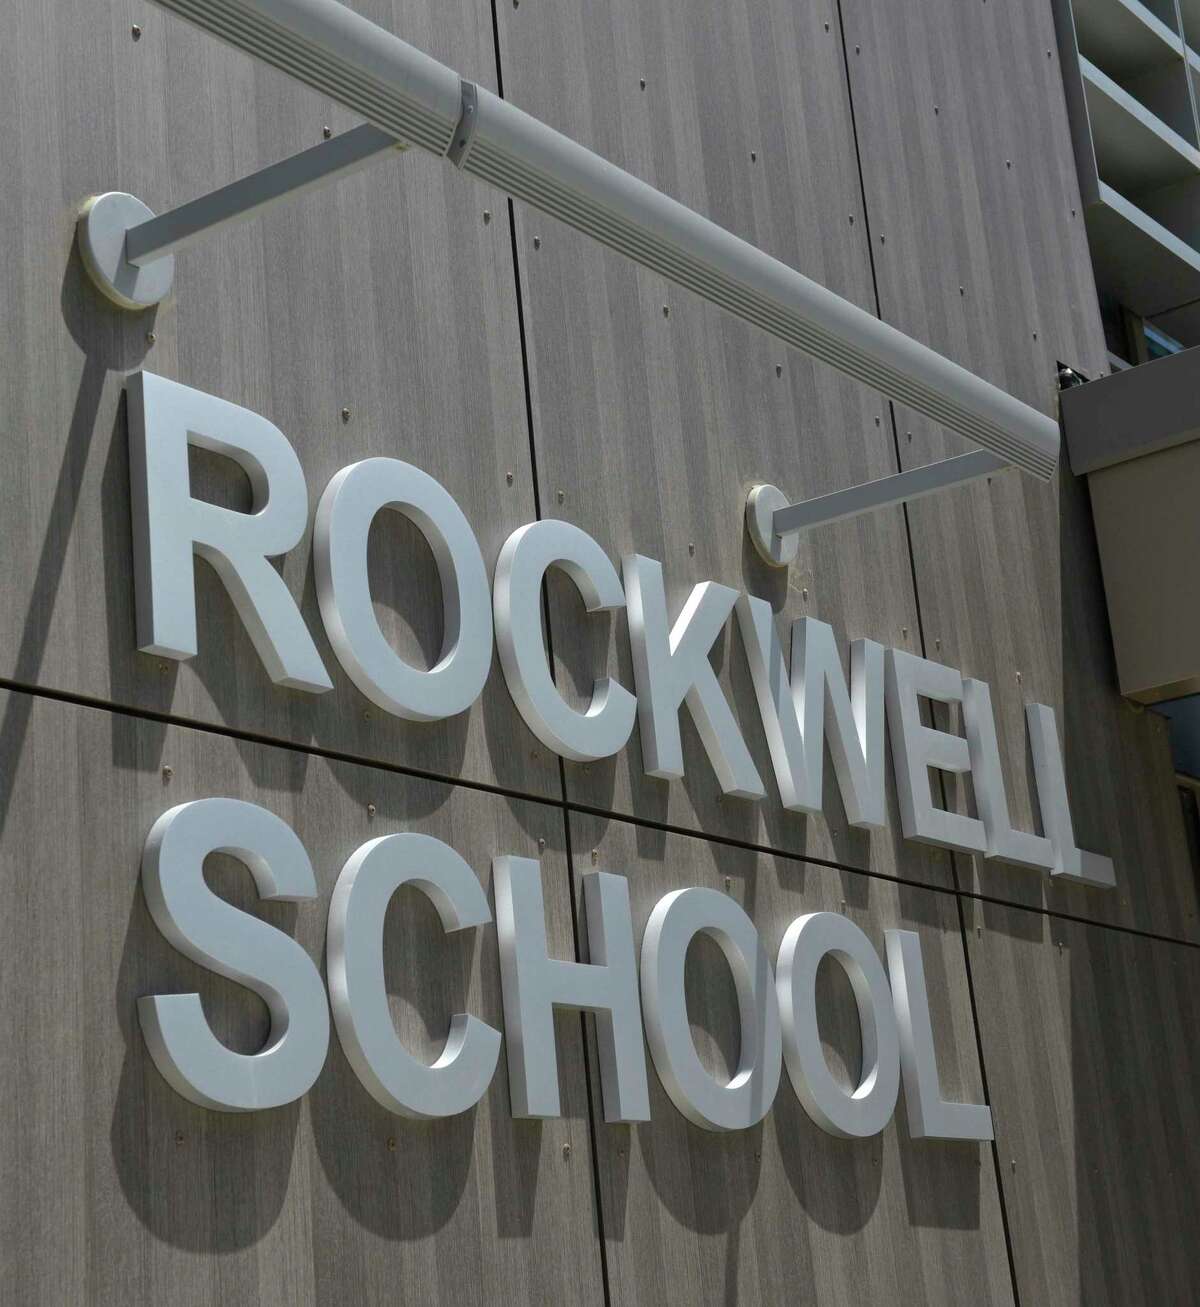 Anna H. Rockwell School in Bethel, Conn.